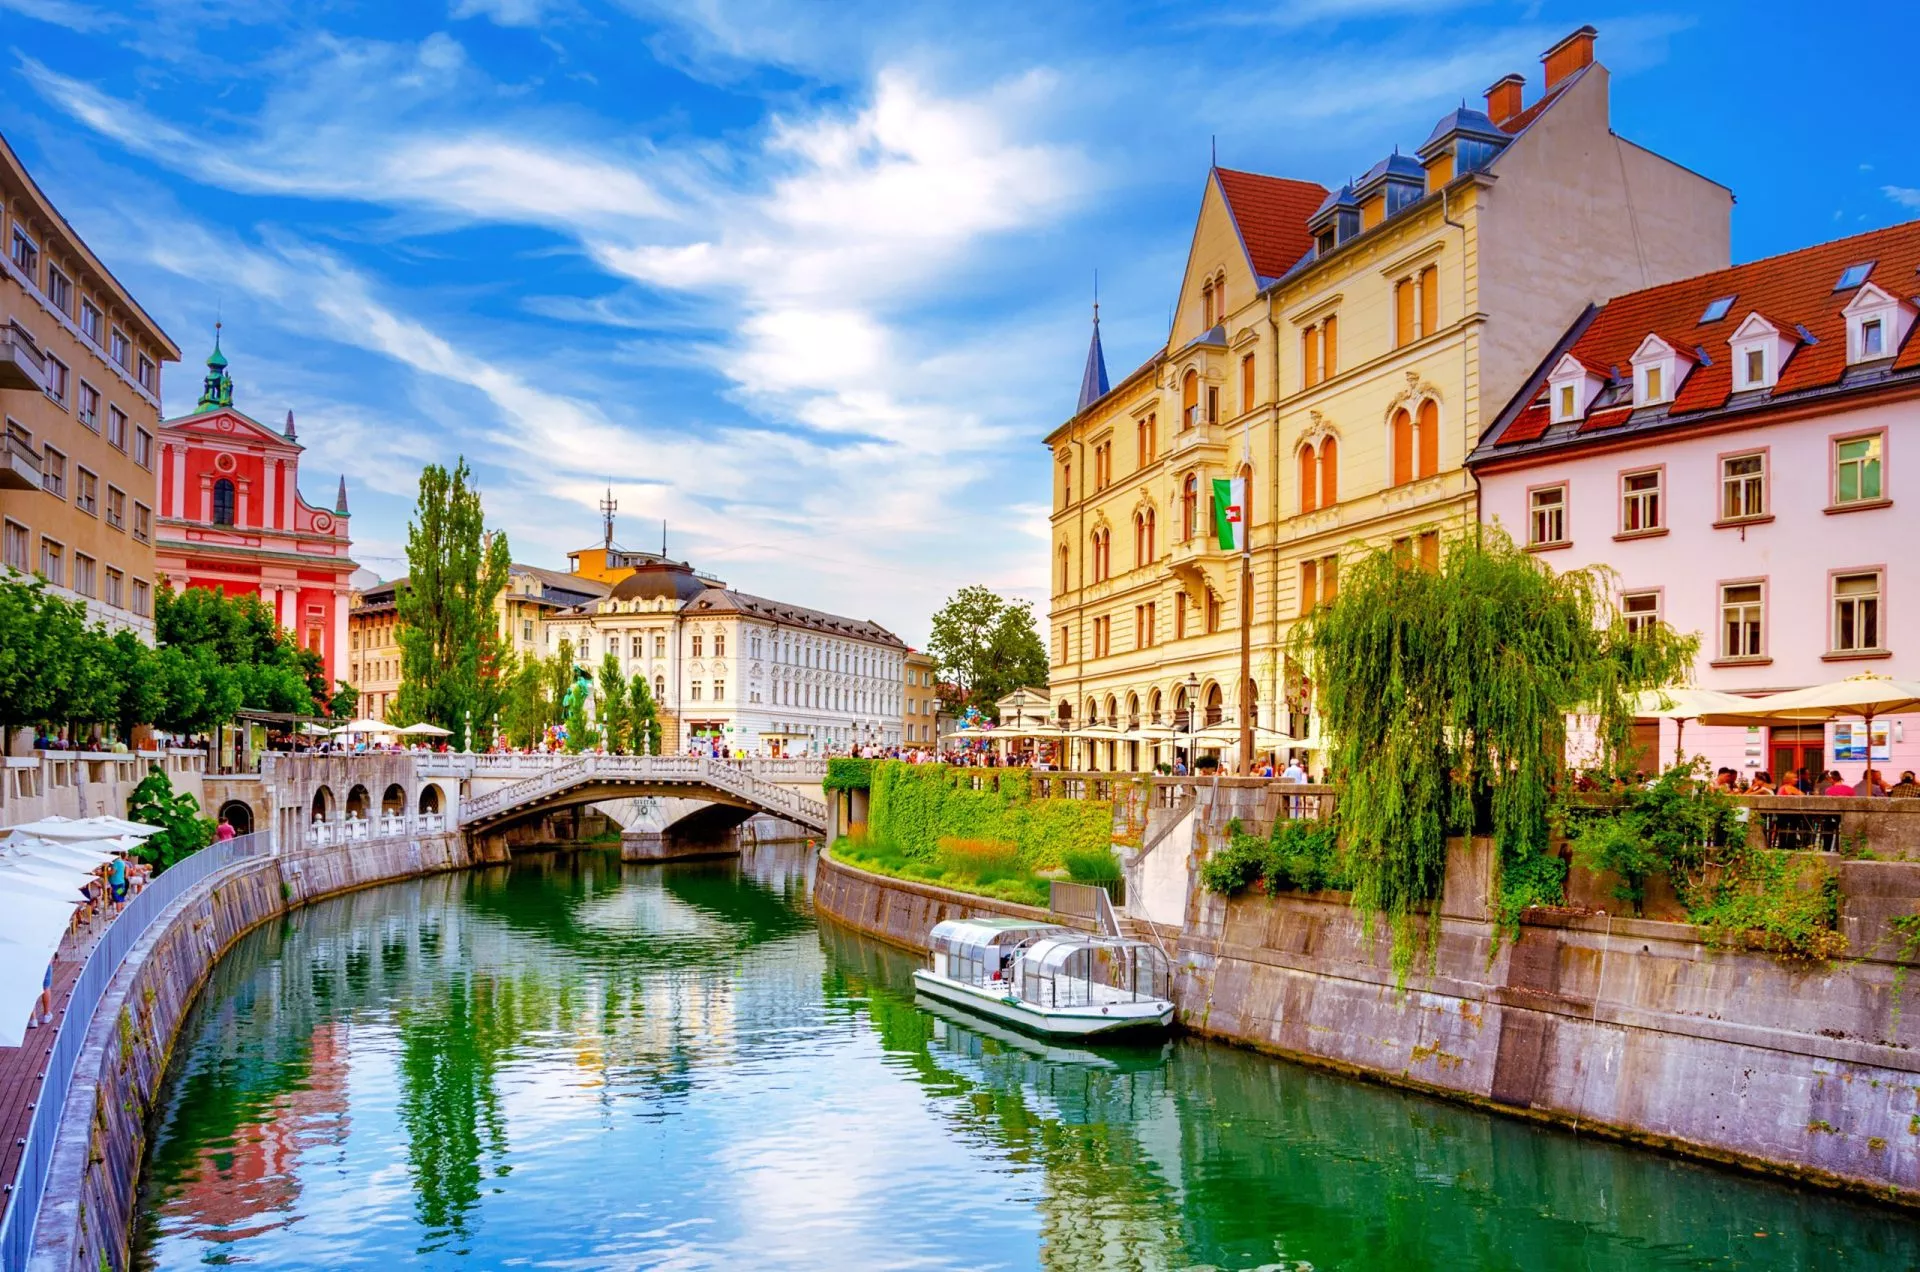 Explore the colorful Ljubljana